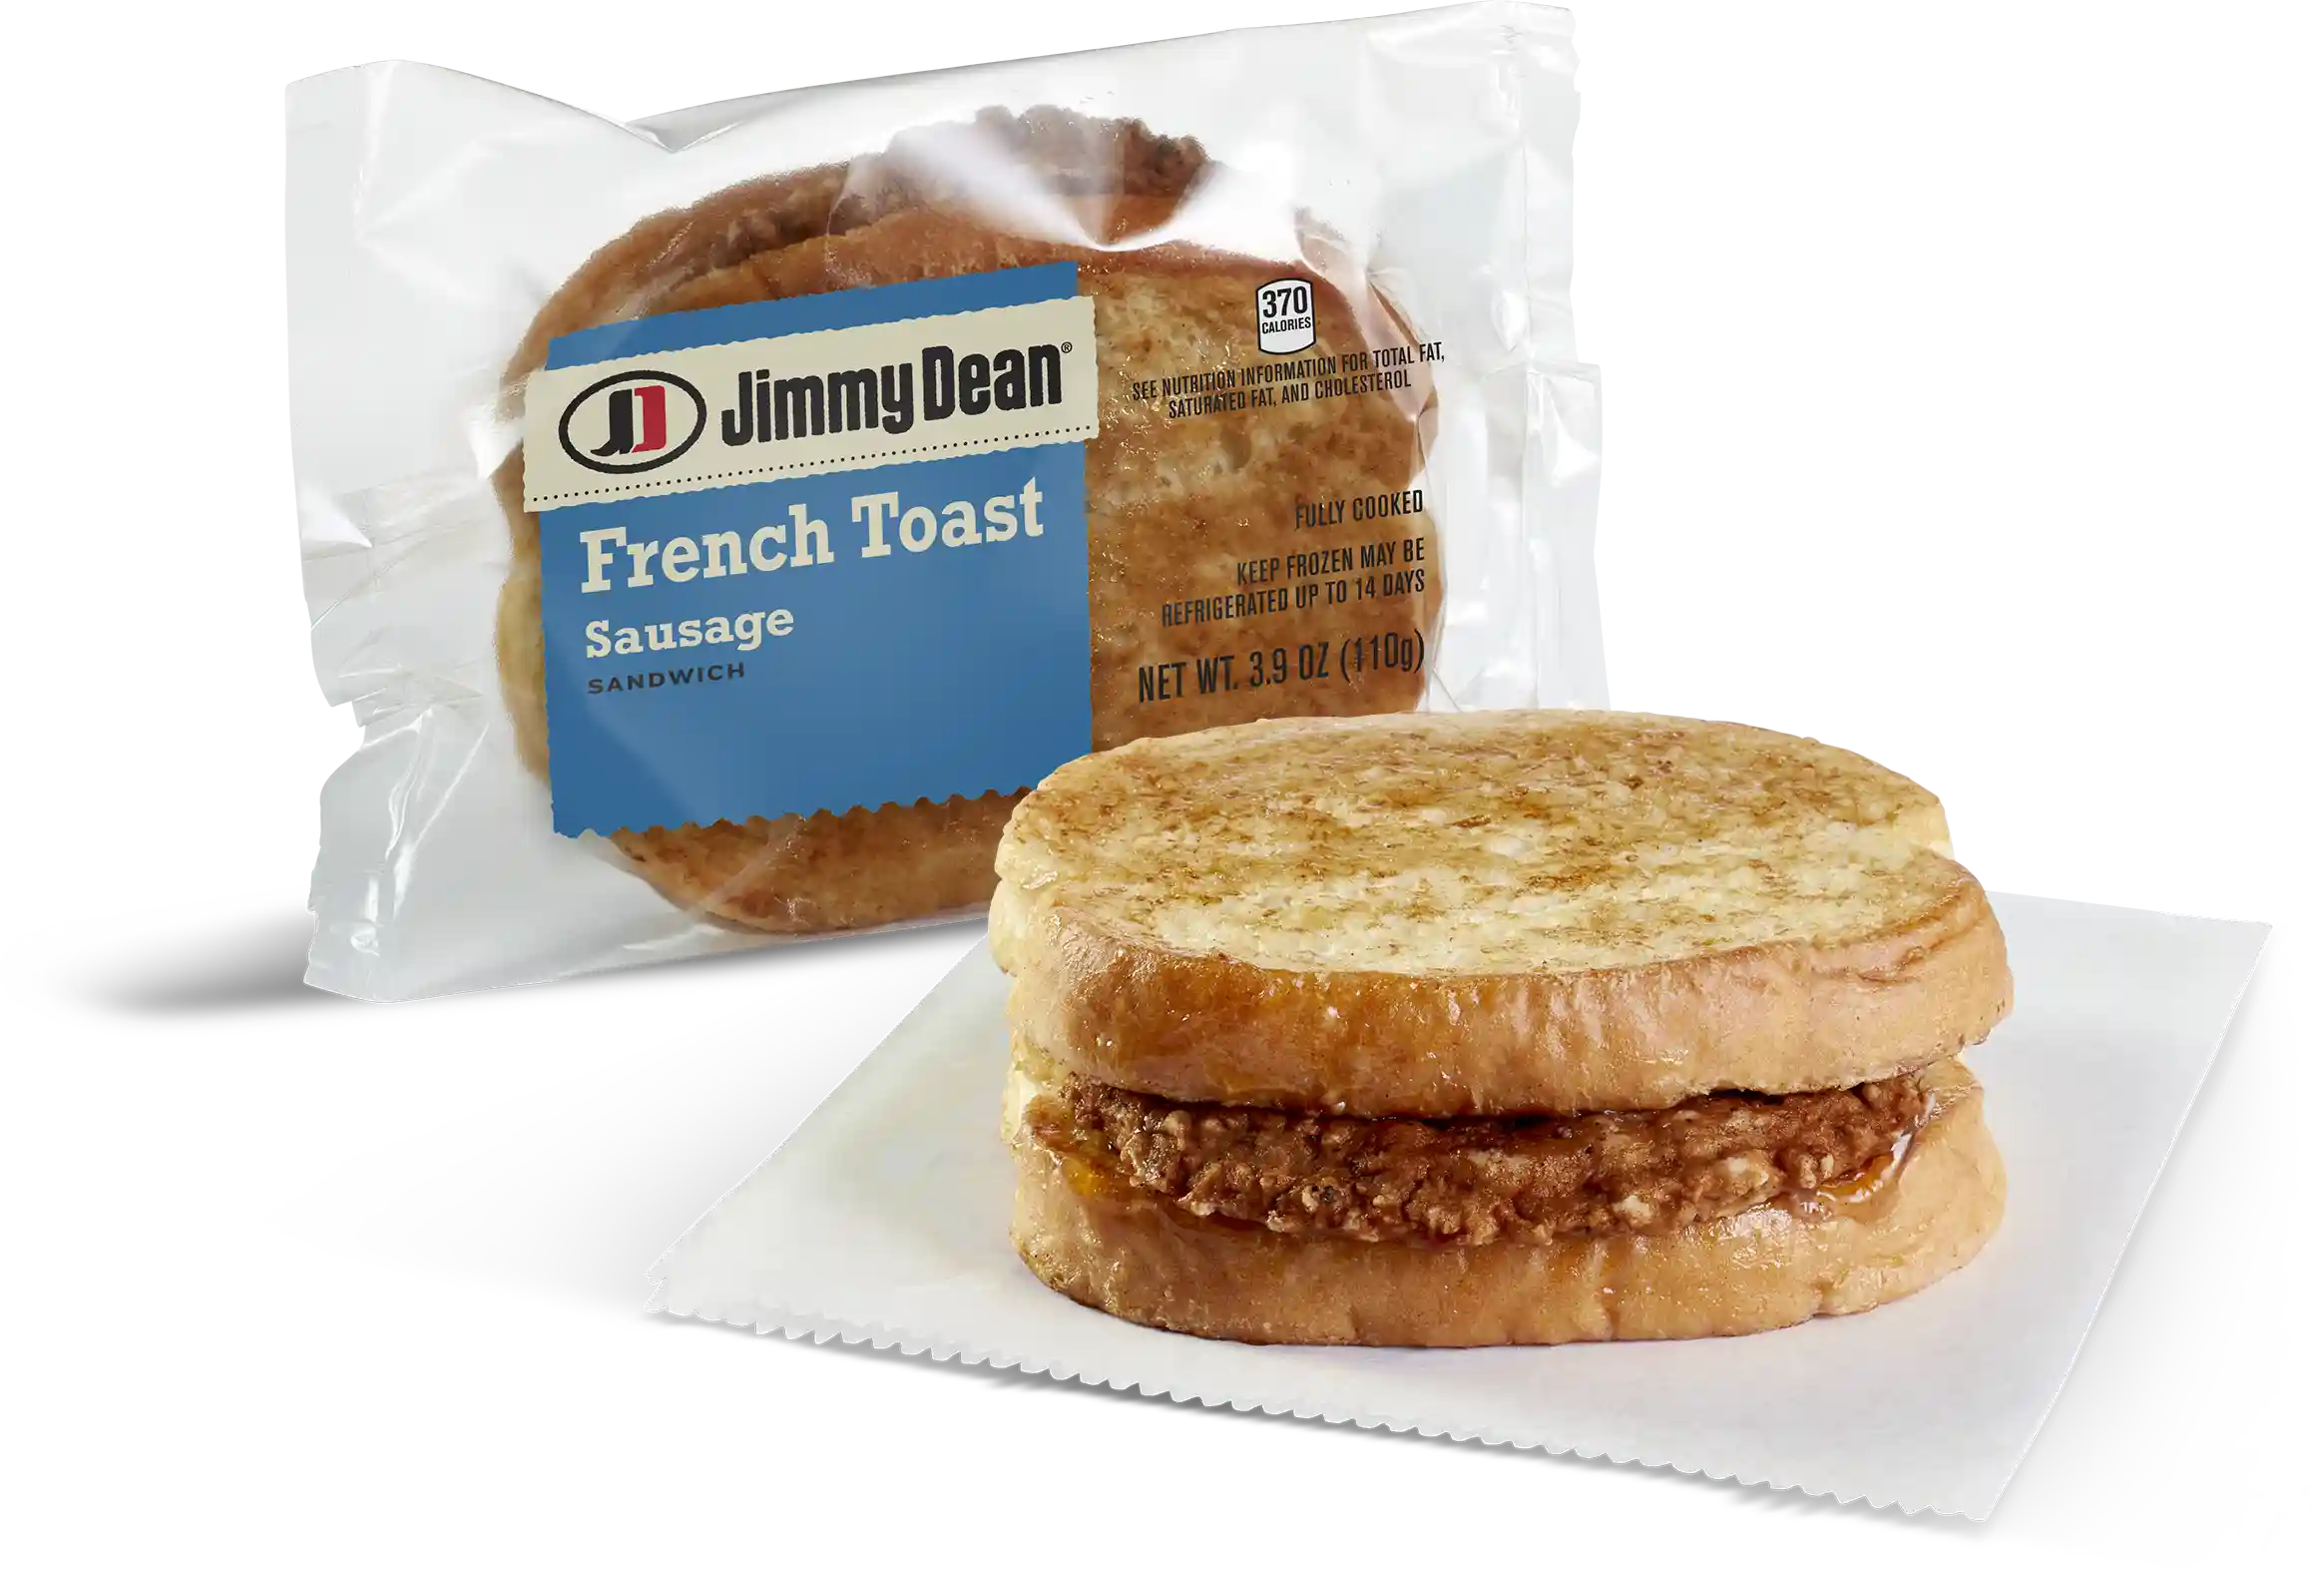 Jimmy Dean® French Toast Sausage Sandwichhttps://images.salsify.com/image/upload/s--ripWsOC5--/q_25/baiqsq0onkzclzha0jln.webp